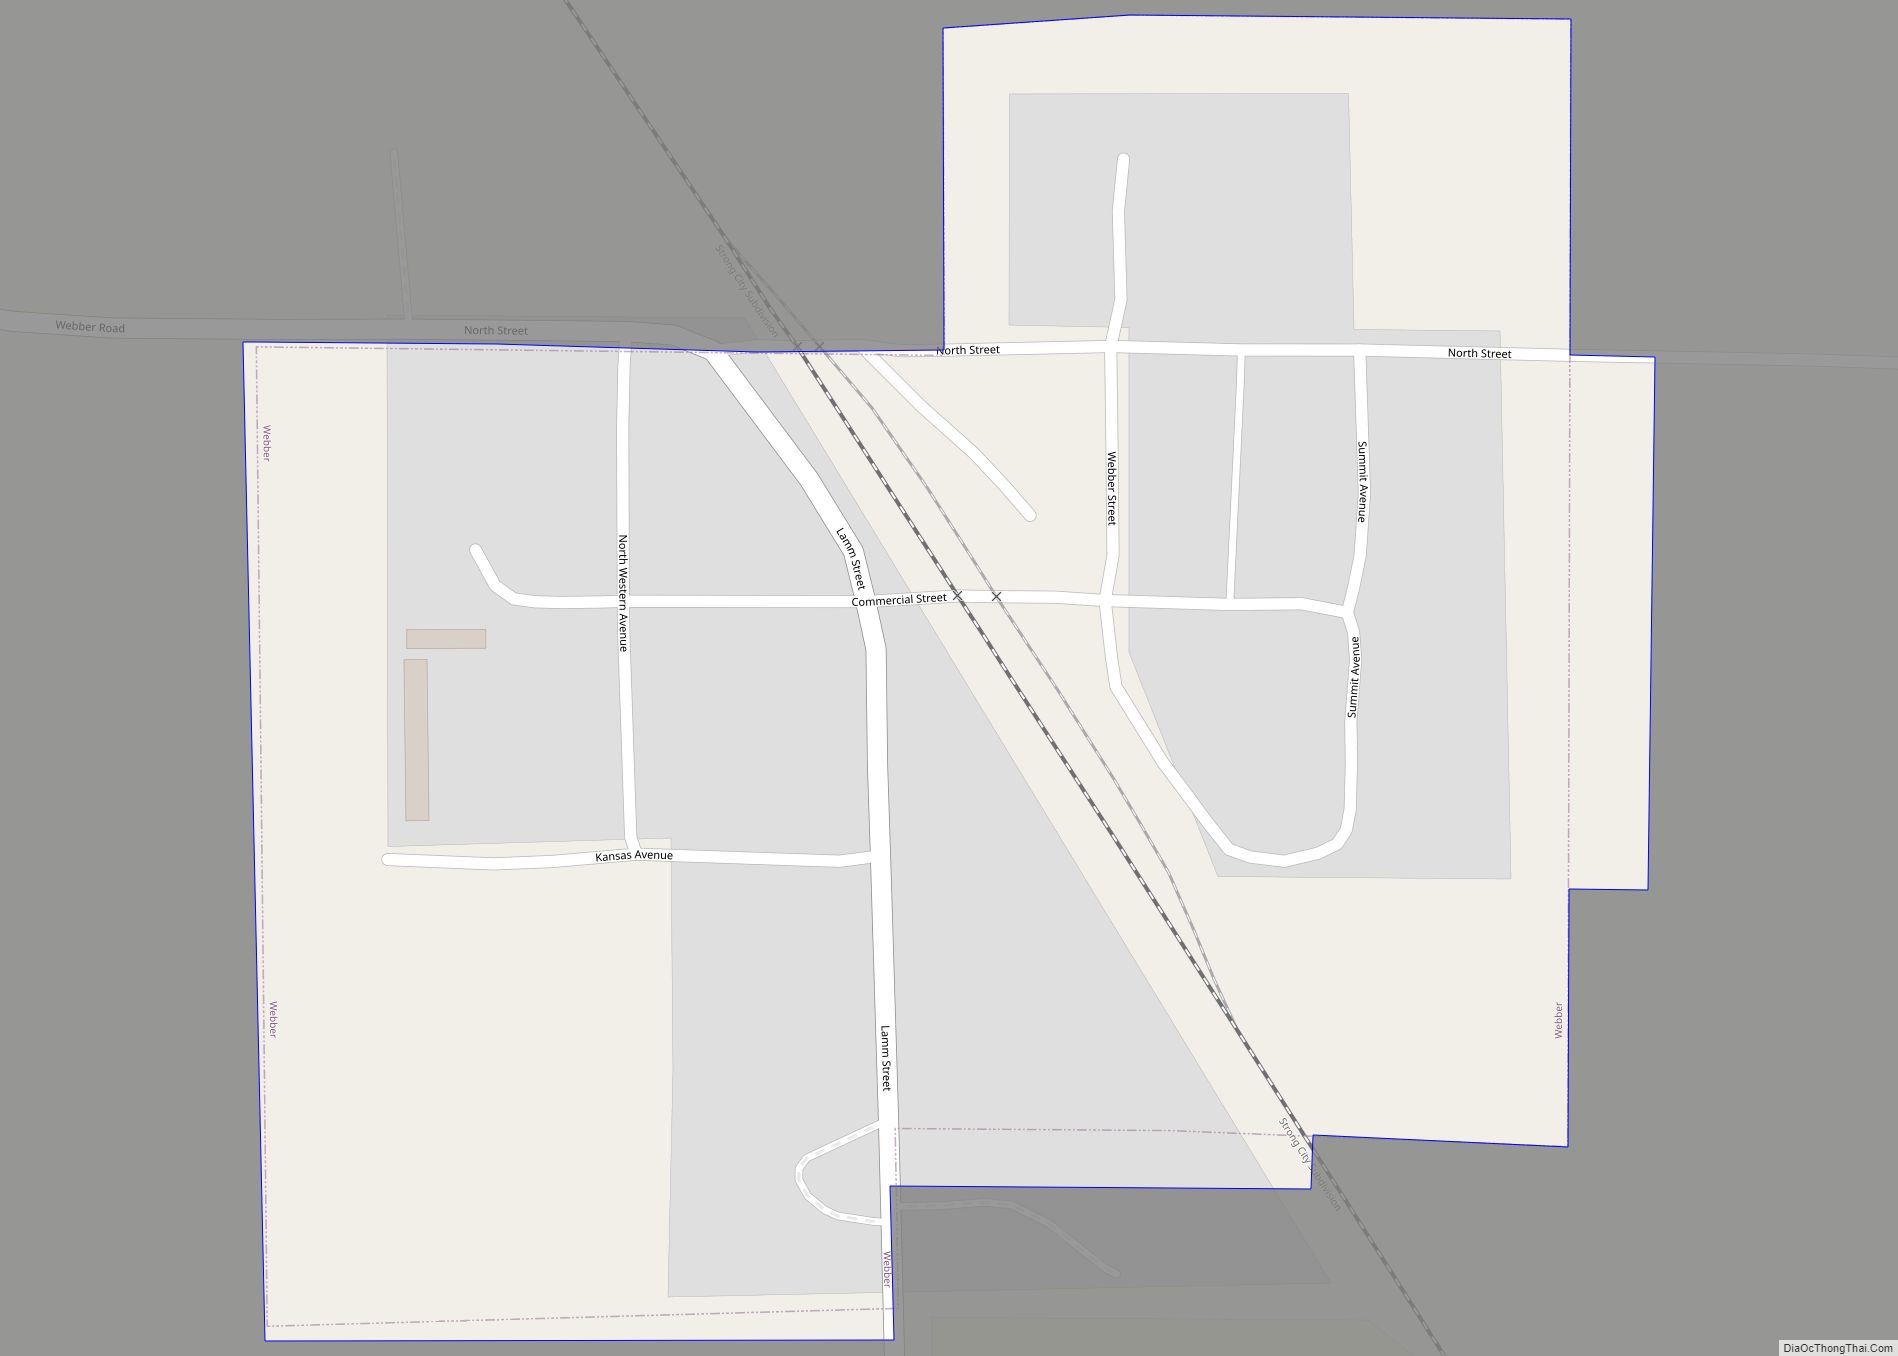 Map of Webber city